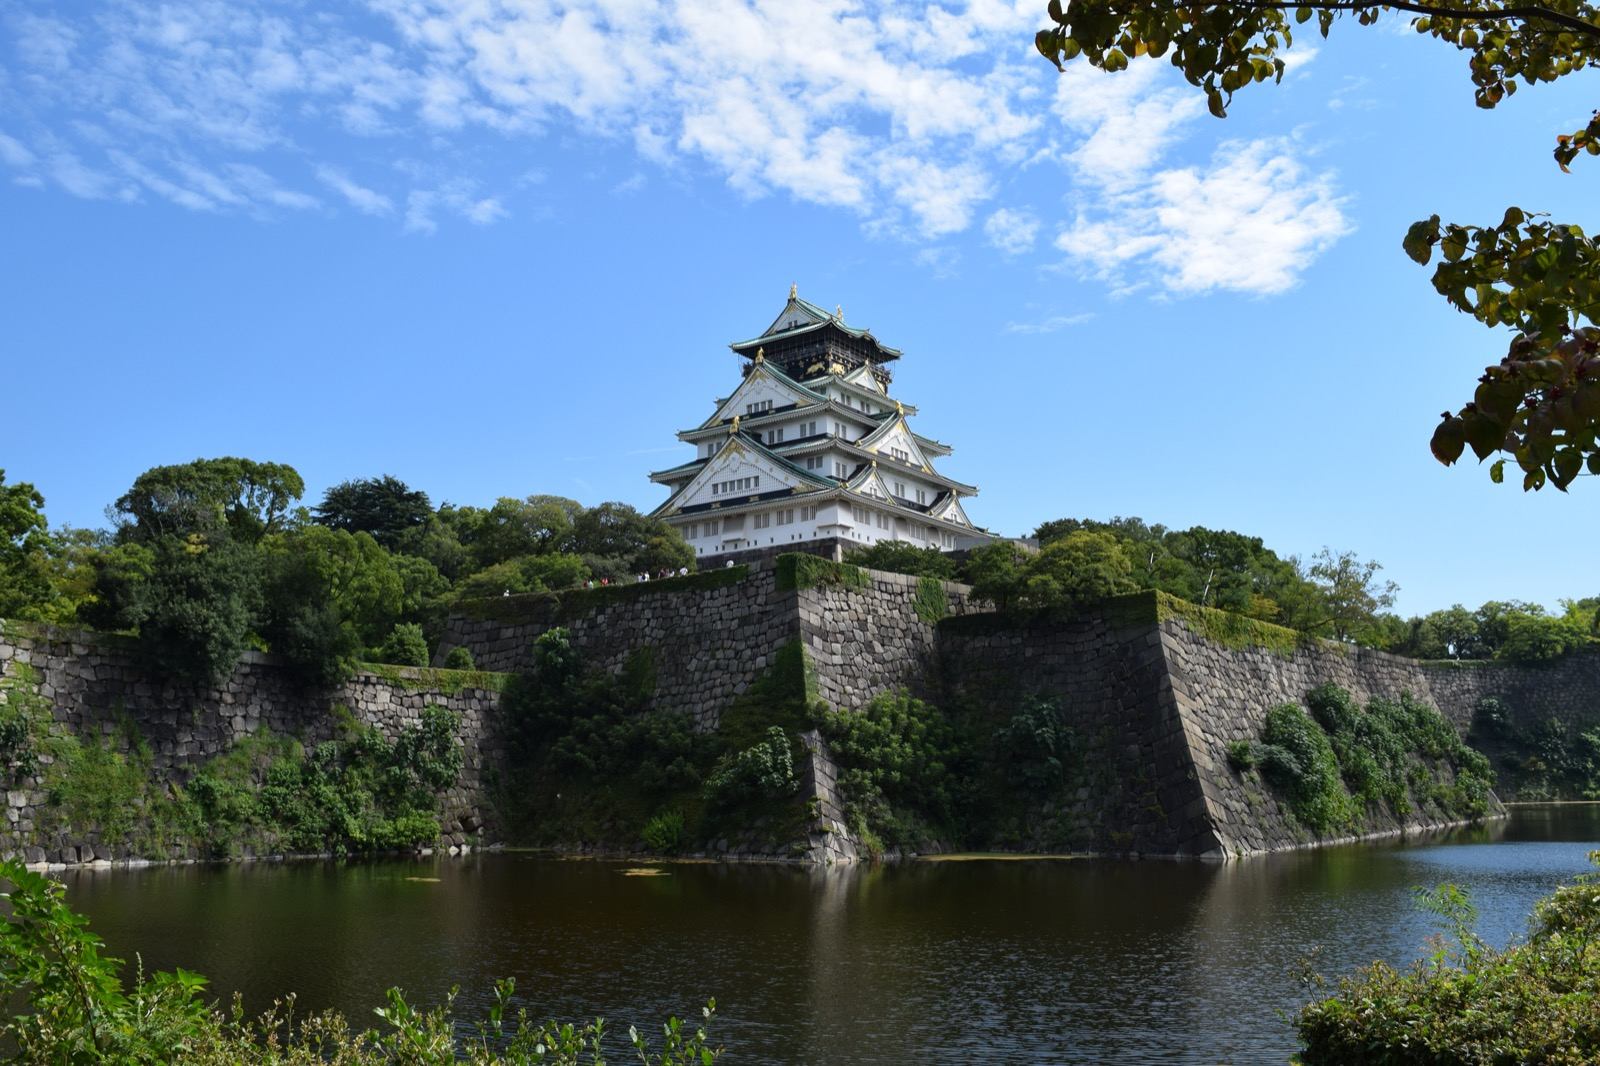 Photo of Osaka Castle, Japan (Osaka Castle Park (Revisited) - 大阪城公園 by John Dunsmore)